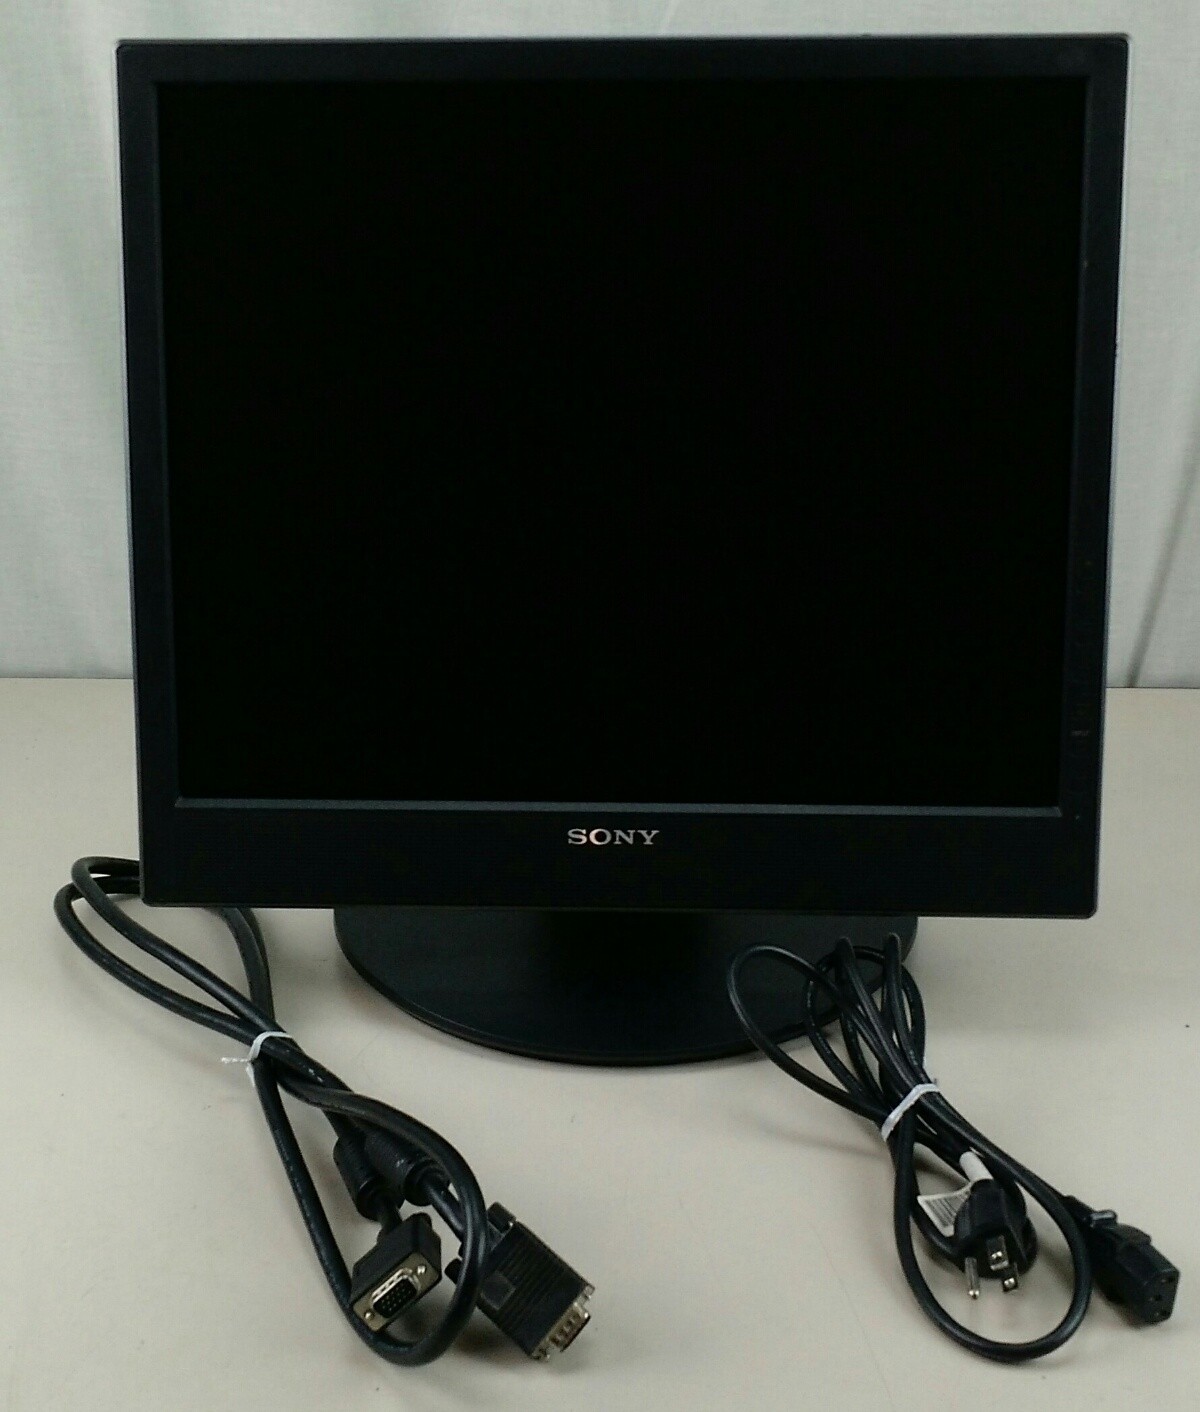 19" Sony SDM-X95F DVI LCD Monitor w/Speakers (Black)